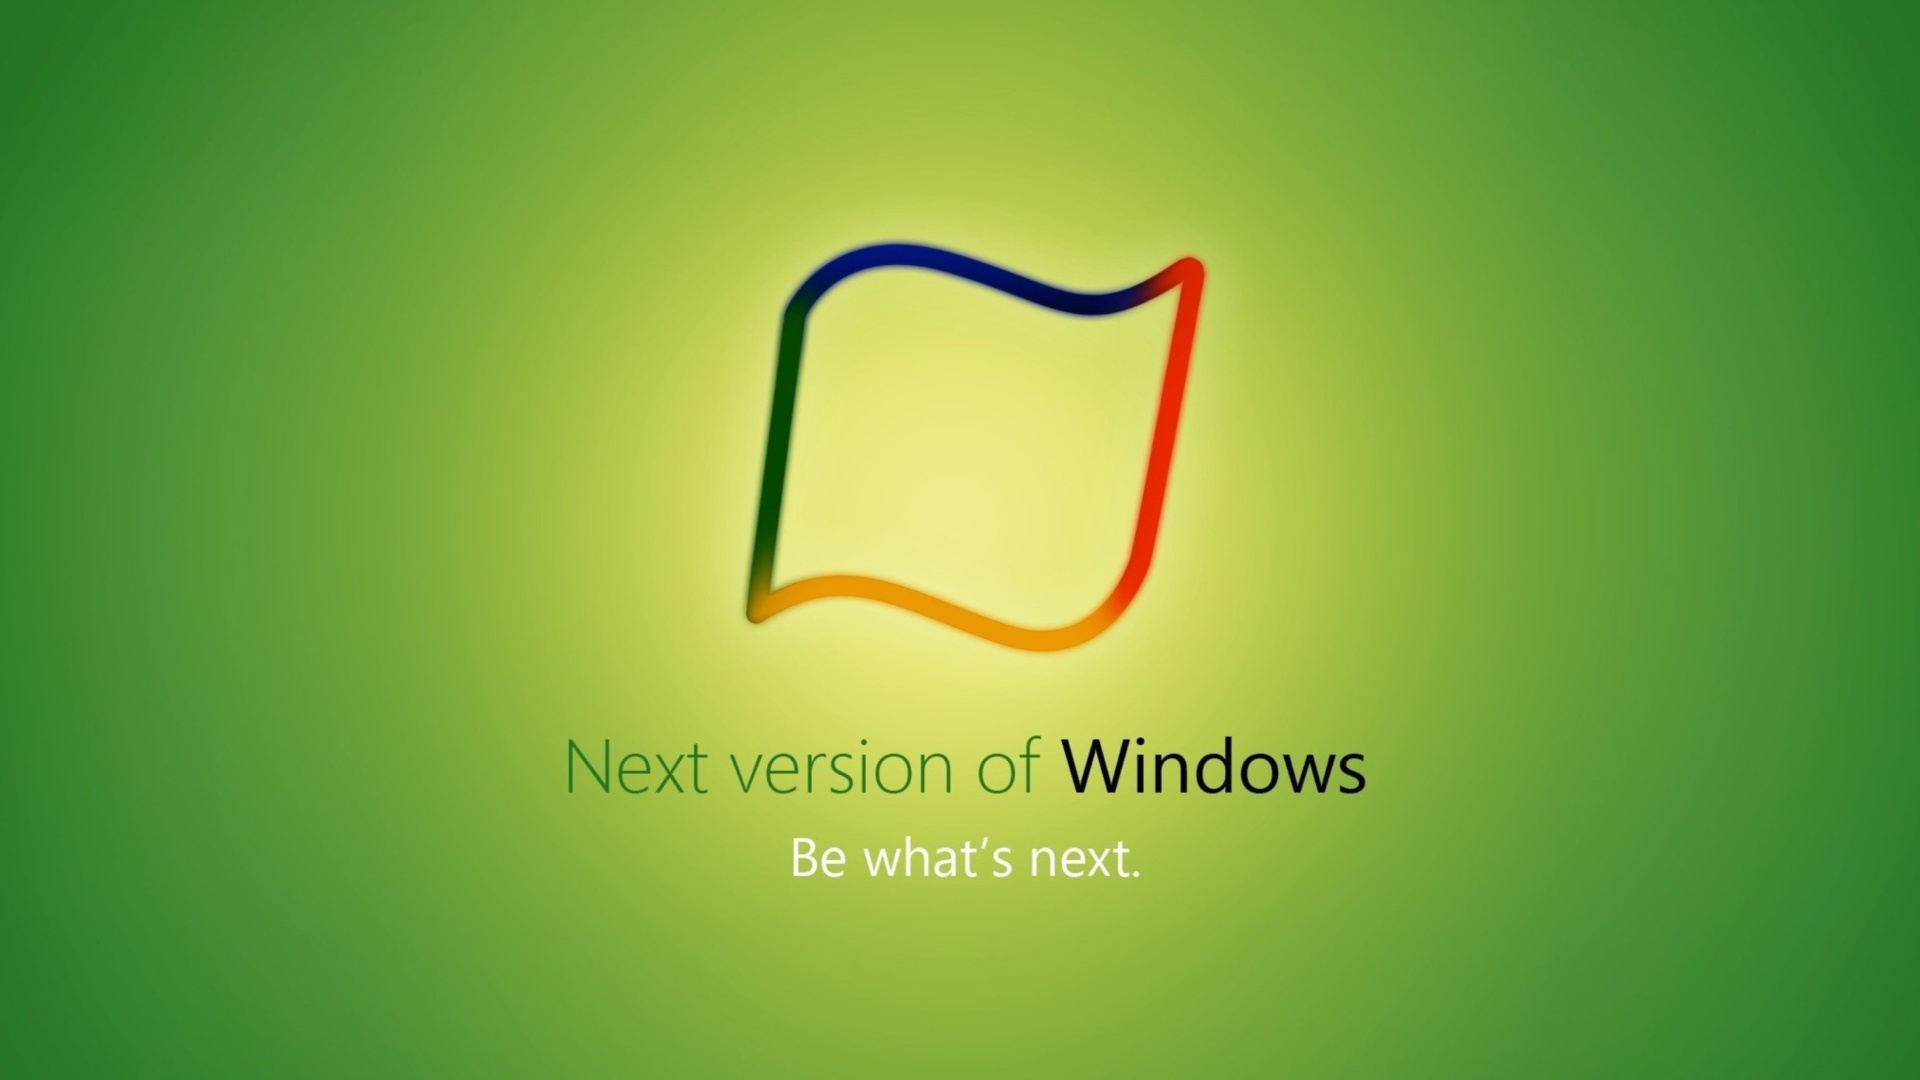 Das Windows 8 Green Edition Wallpaper 1920x1080